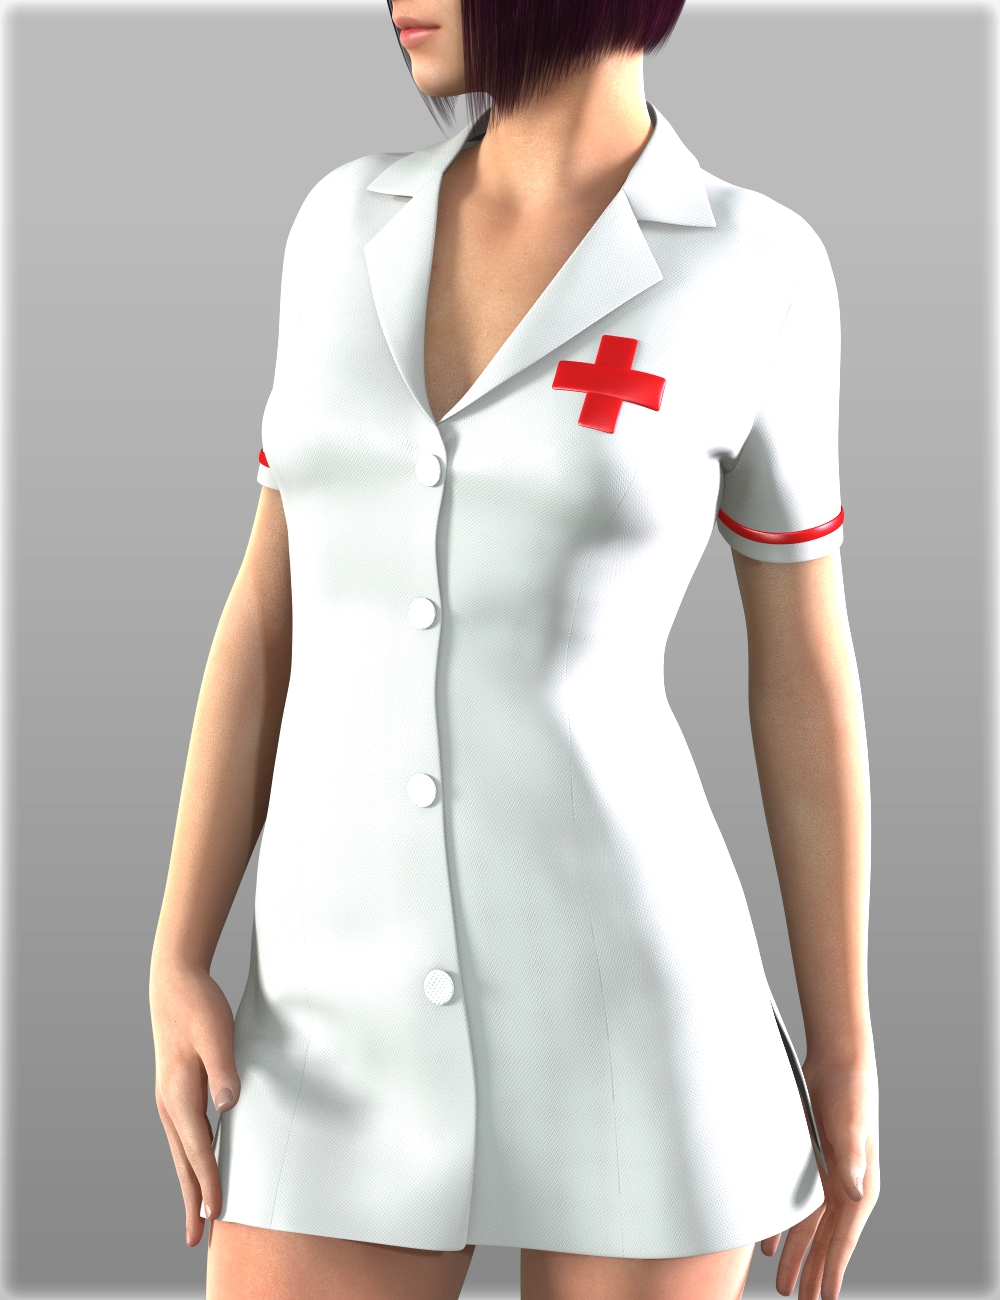 Sexy Nurse Underwear for Genesis 2 Female(s)